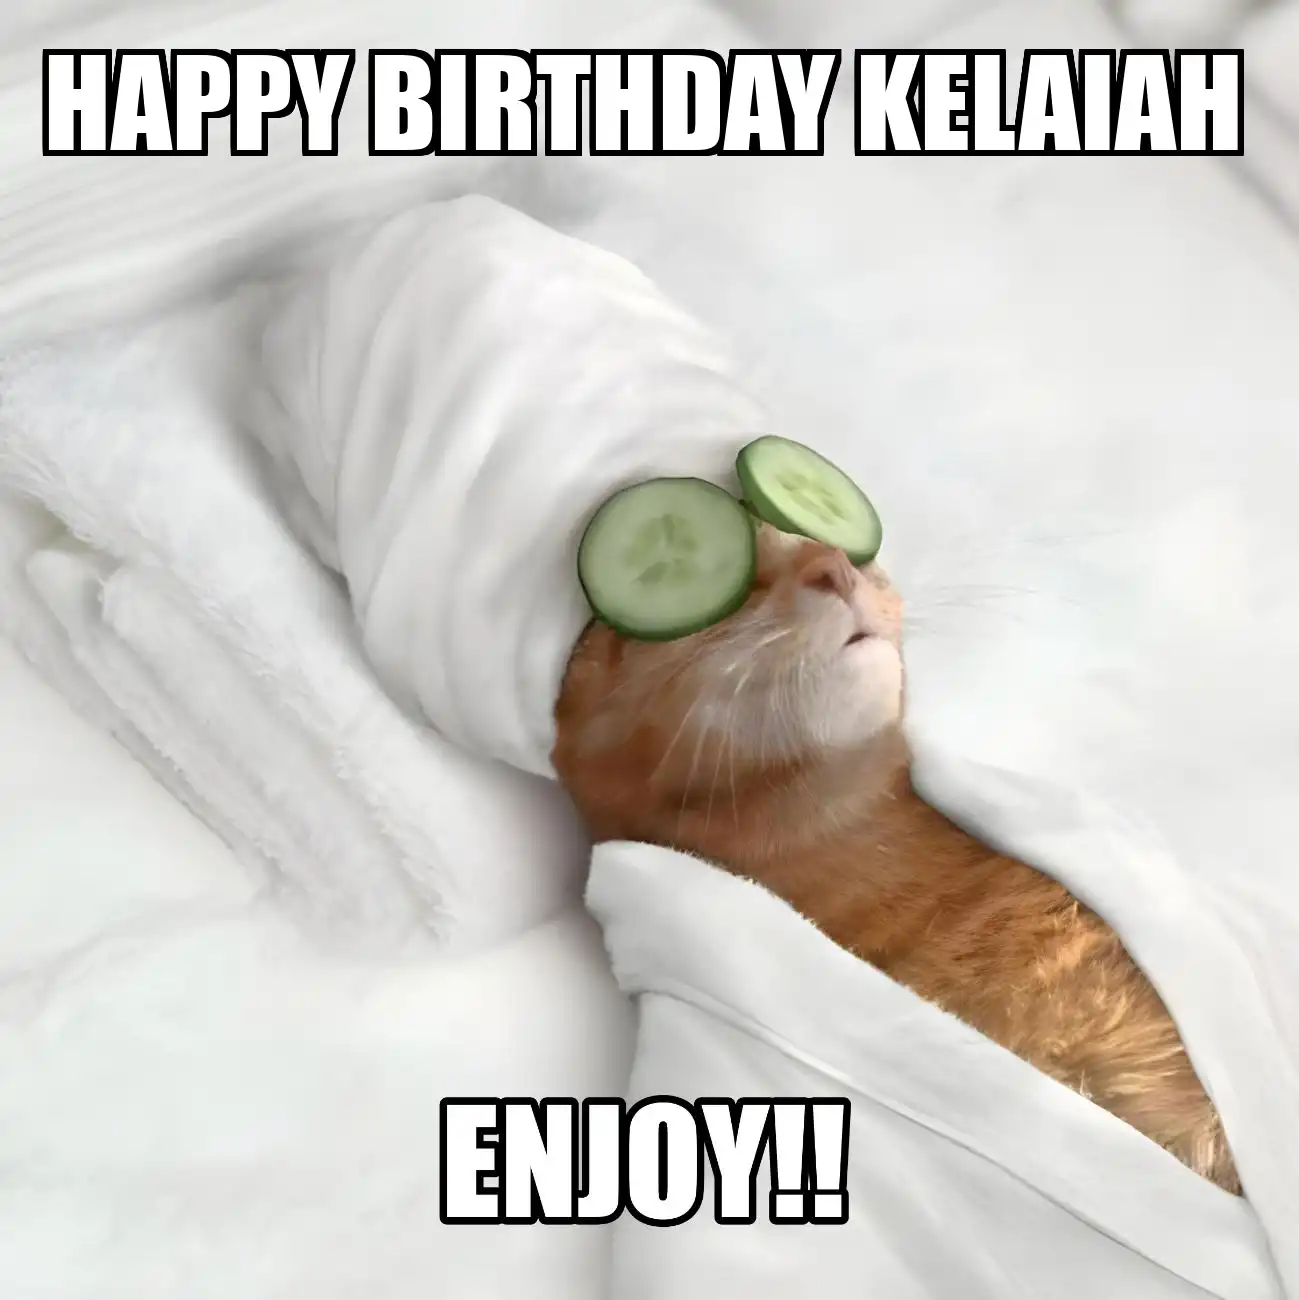 Happy Birthday Kelaiah Enjoy Cat Meme